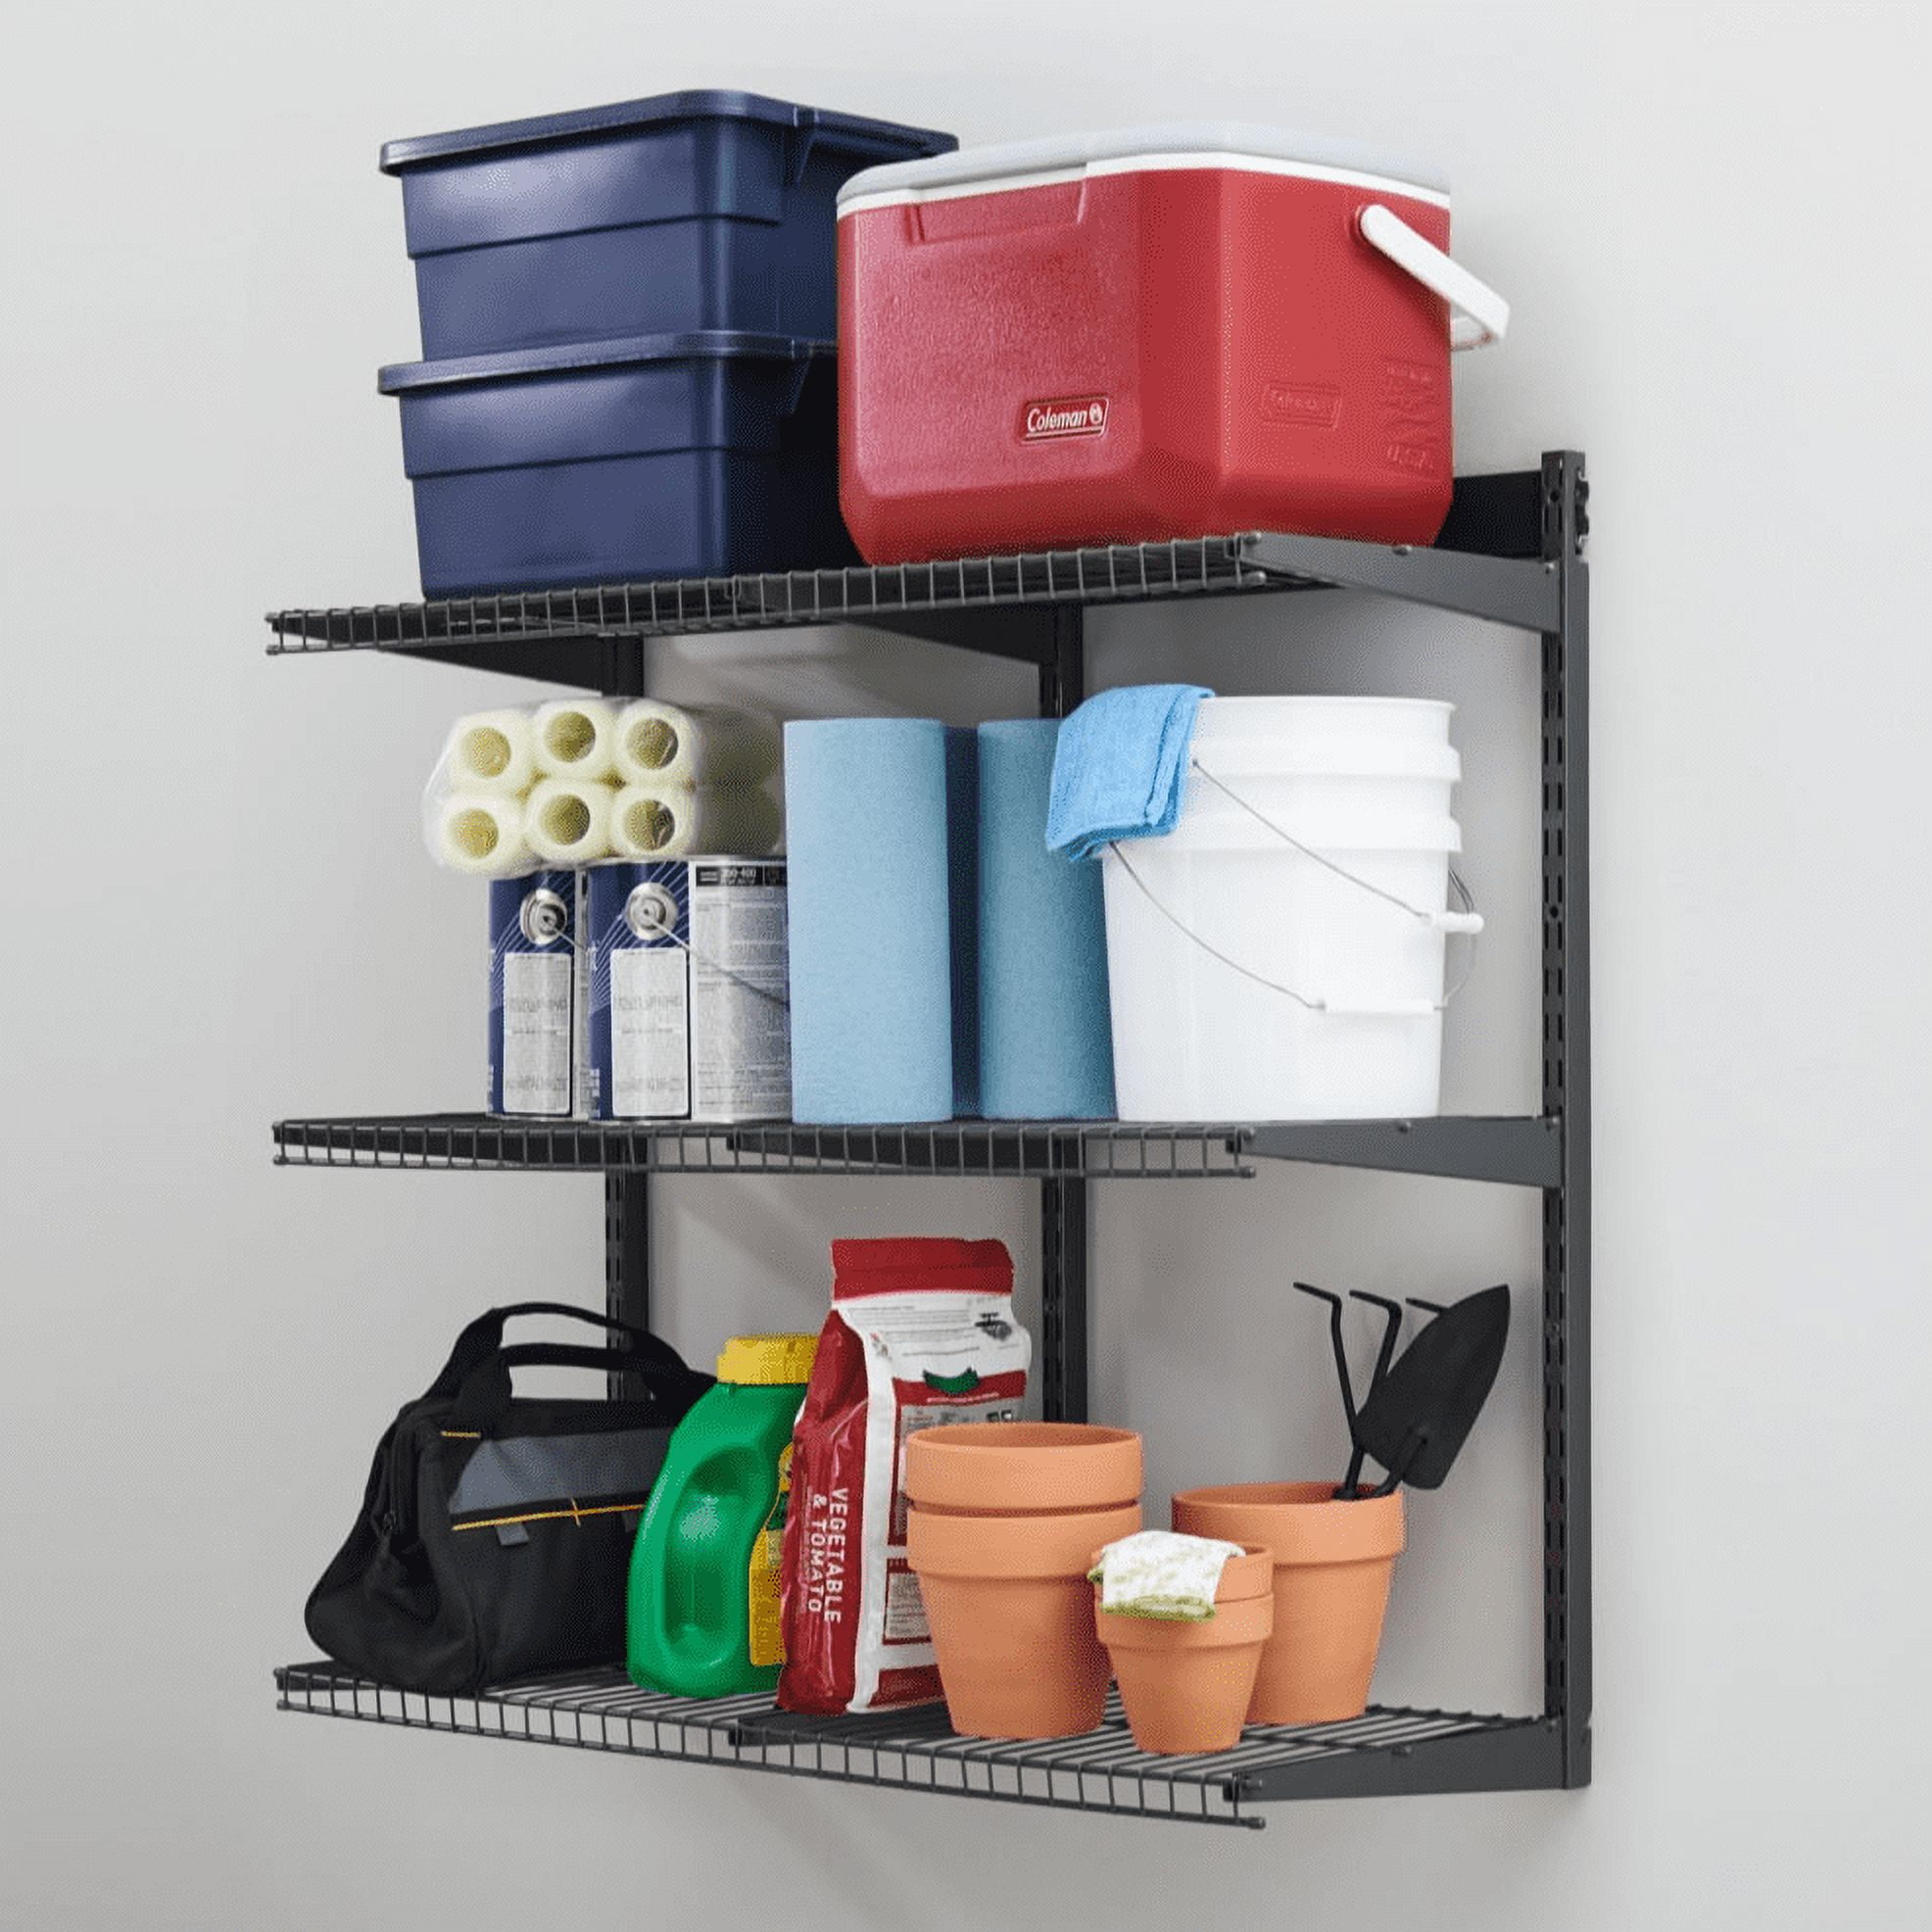 Rubbermaid FastTrack Garage Storage System All-in-One Rail & Hook Kit 6-Piece.